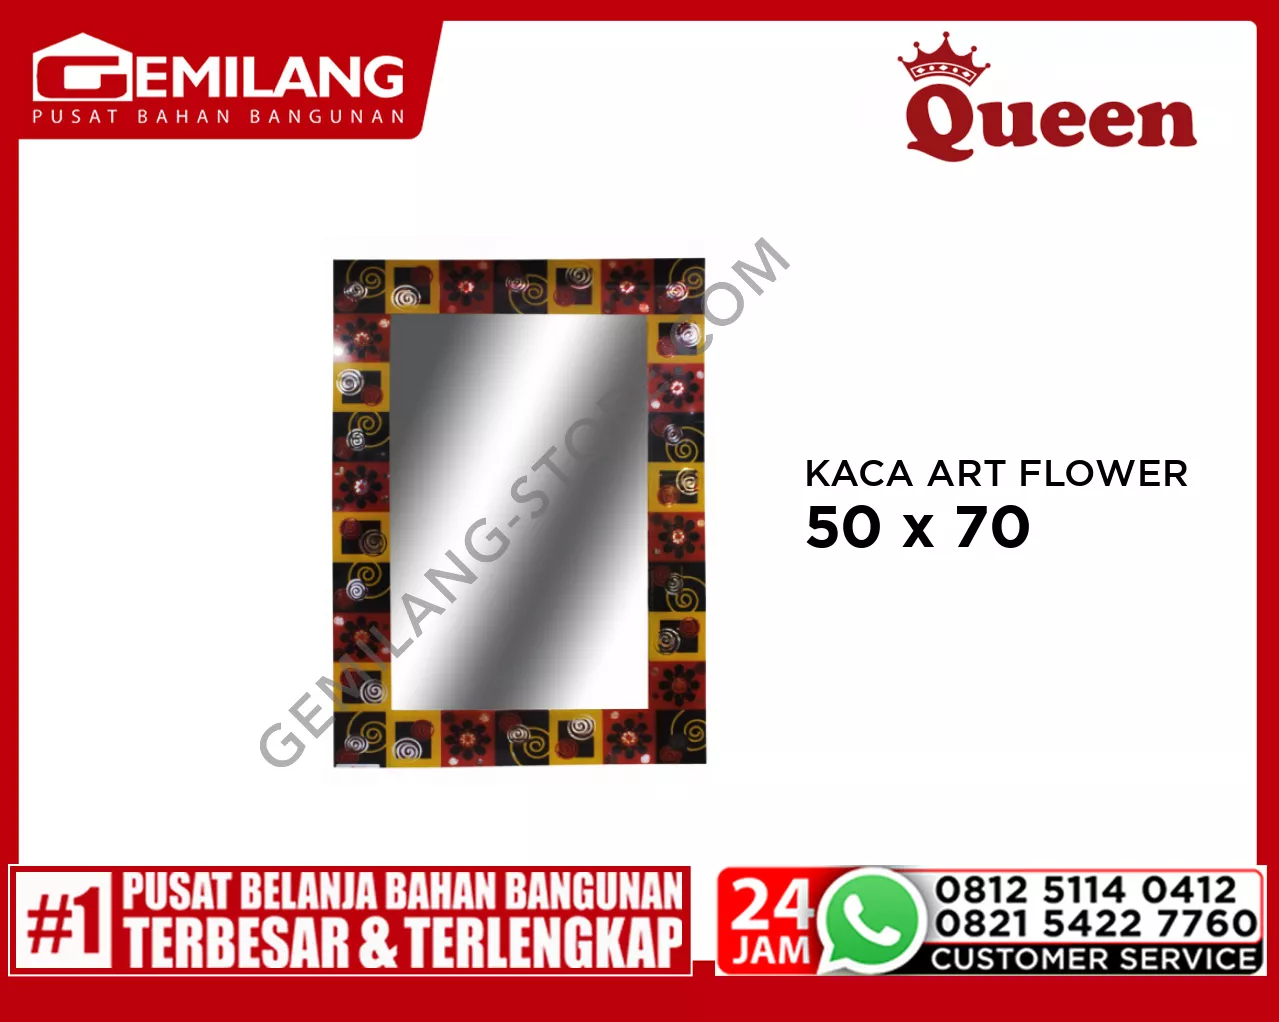 QUEEN KACA ART FLOWER BROWN & YELLOW 50 x 70